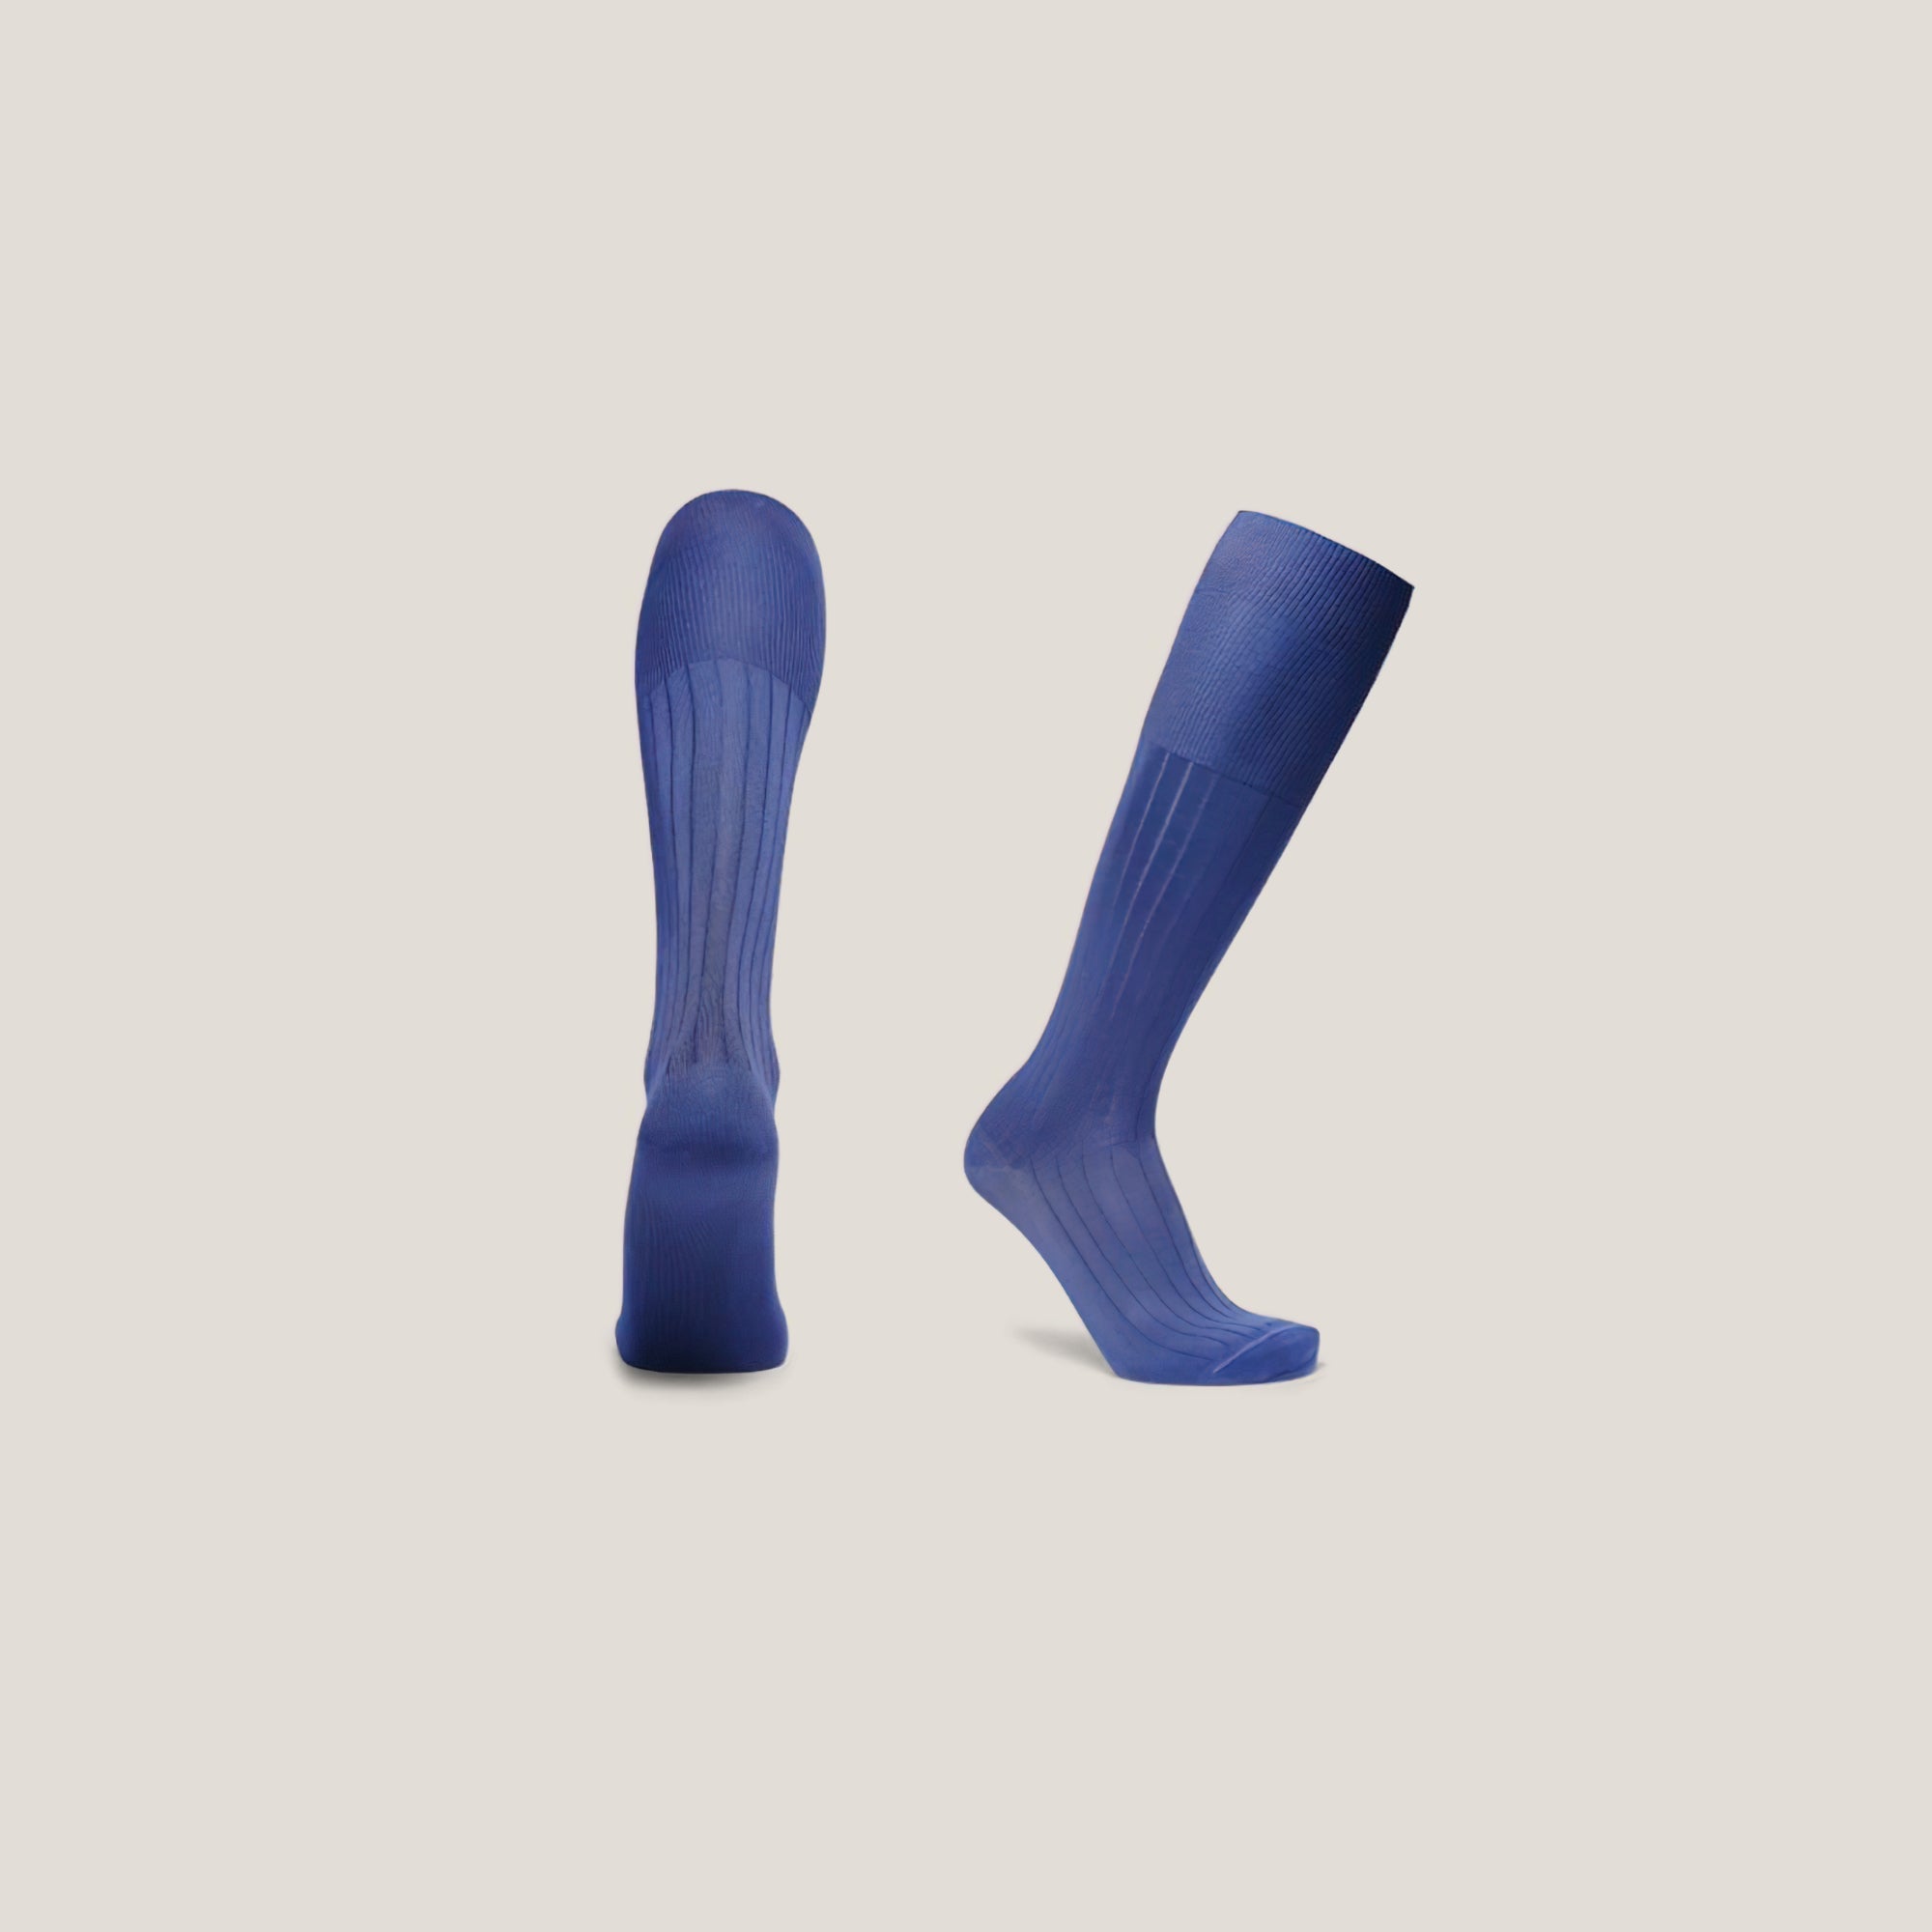 High Knee Royal Navy Socks - Reinhard Frans - socks